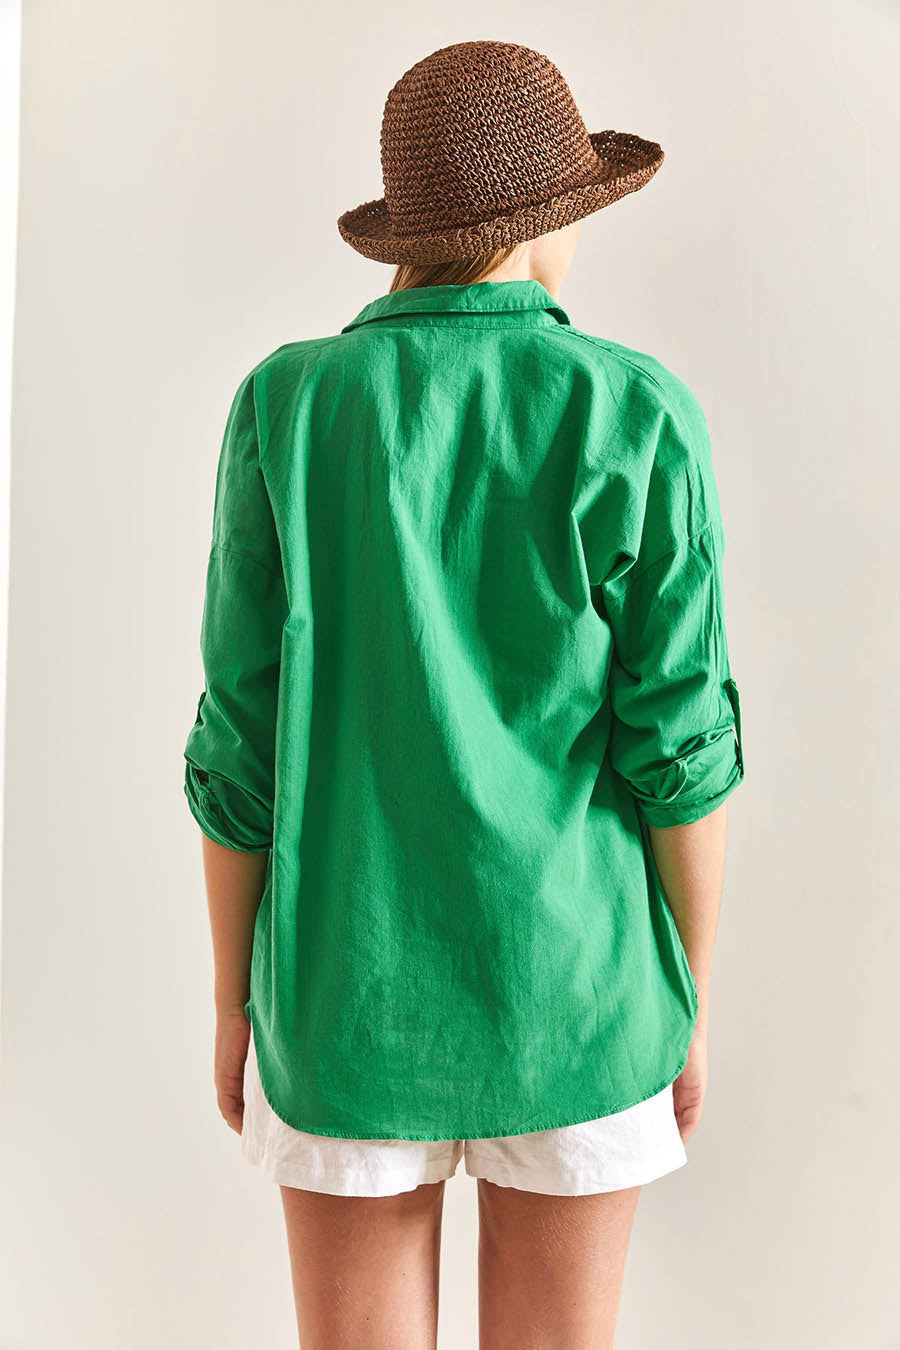 Дамска риза Marilou, Зелен 4